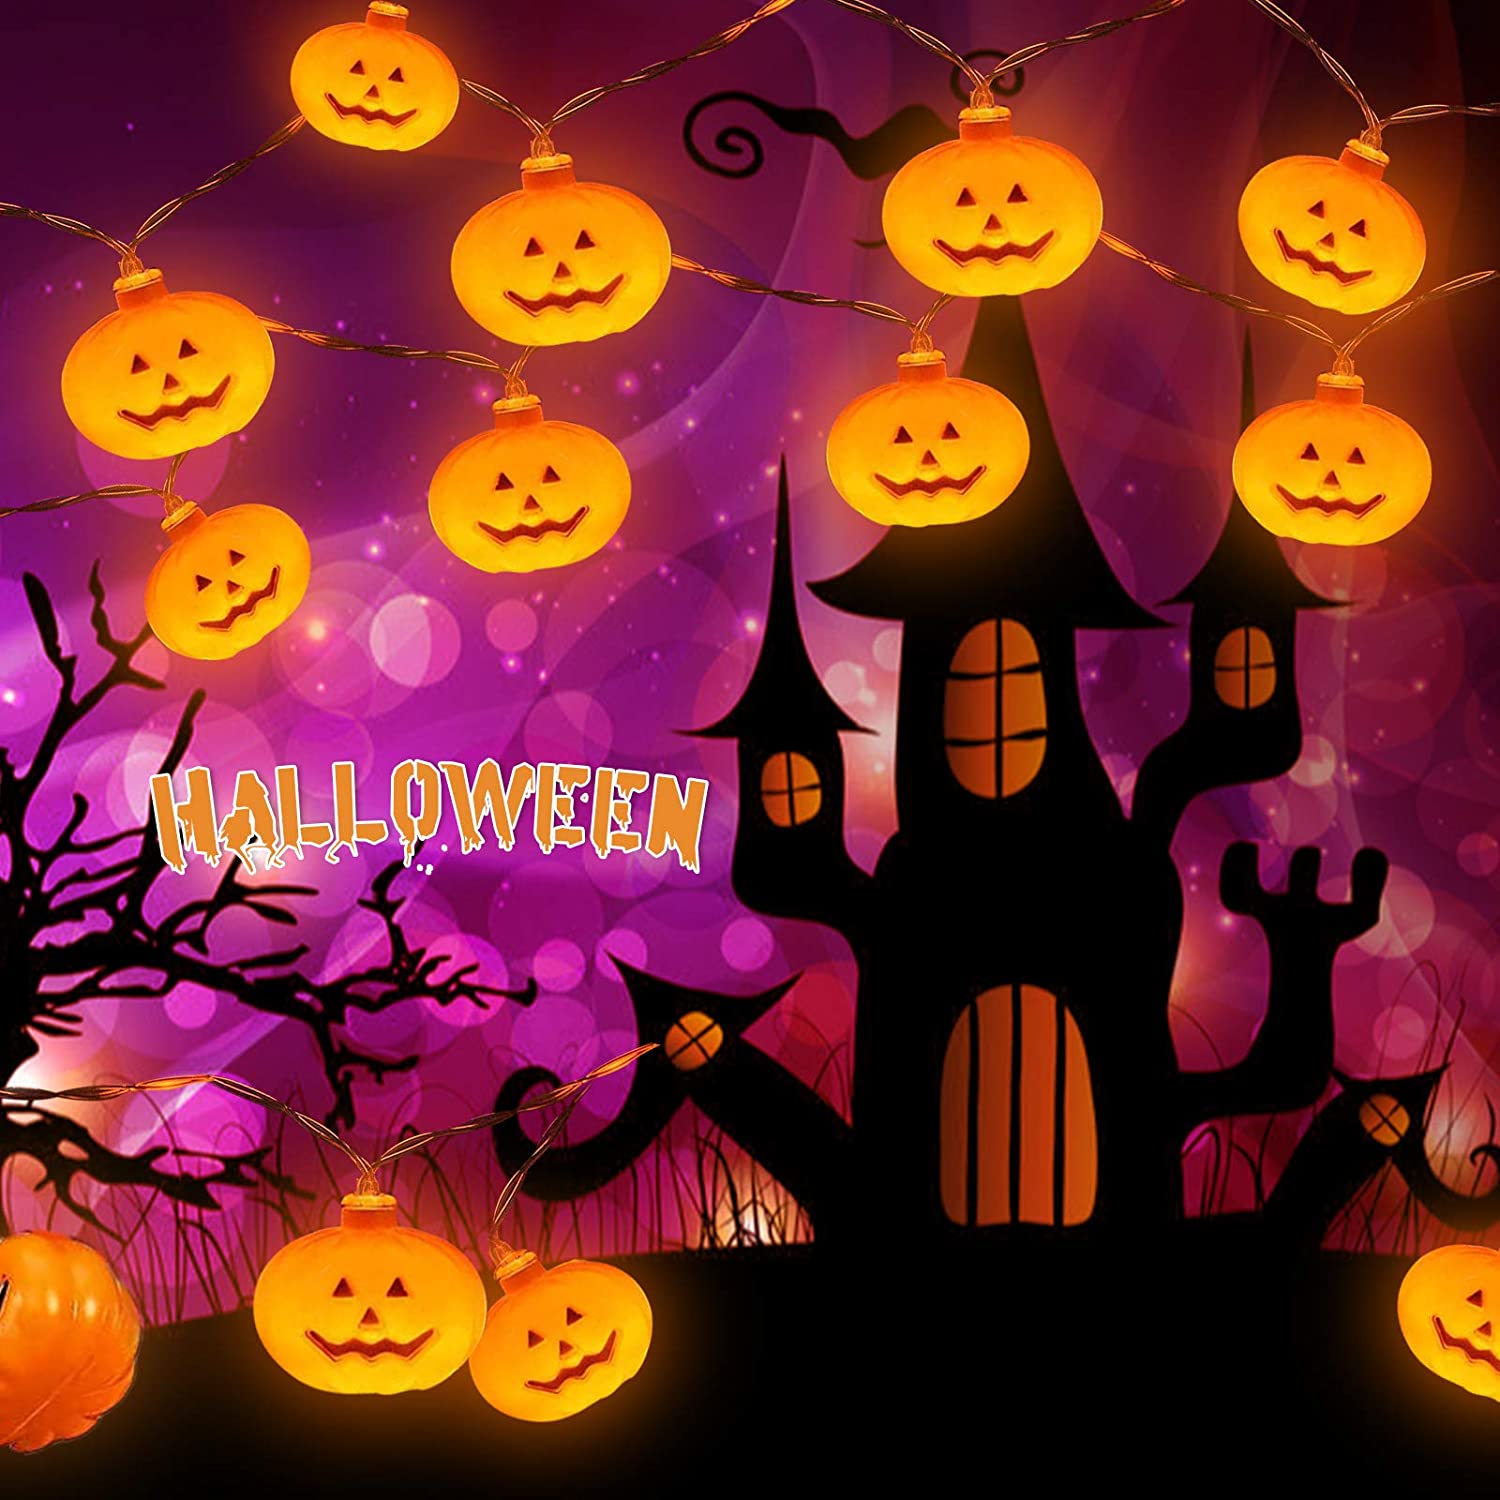 98ft-Halloween-Decorations-20-LED-Pumpkin-String-Lights-Home-Garden-Decor-Warm-White-1890365-2